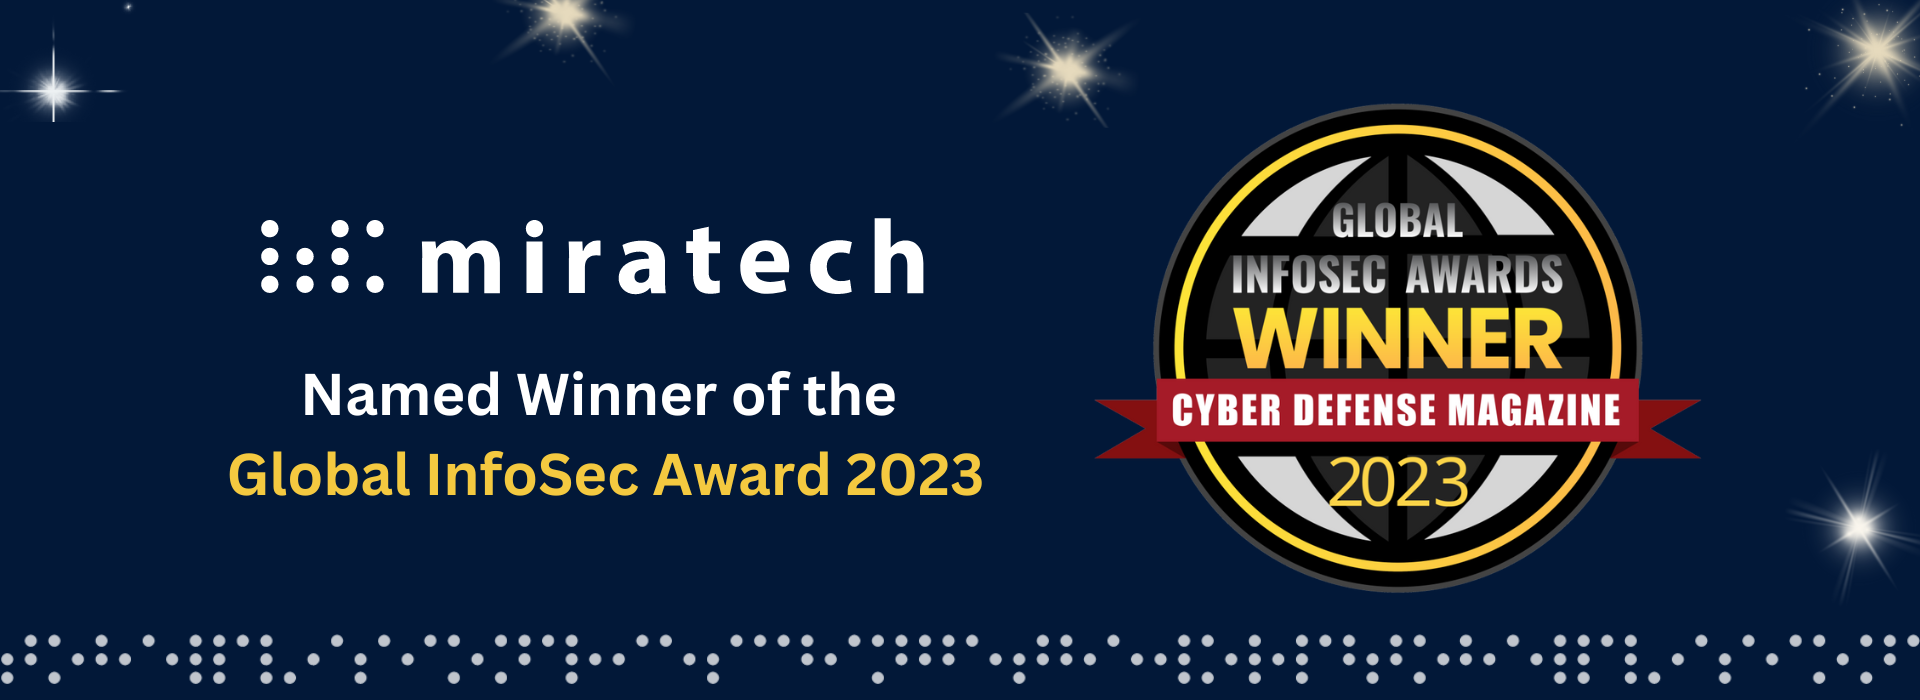 Miratech Named Winner of the Global InfoSec Award 2023